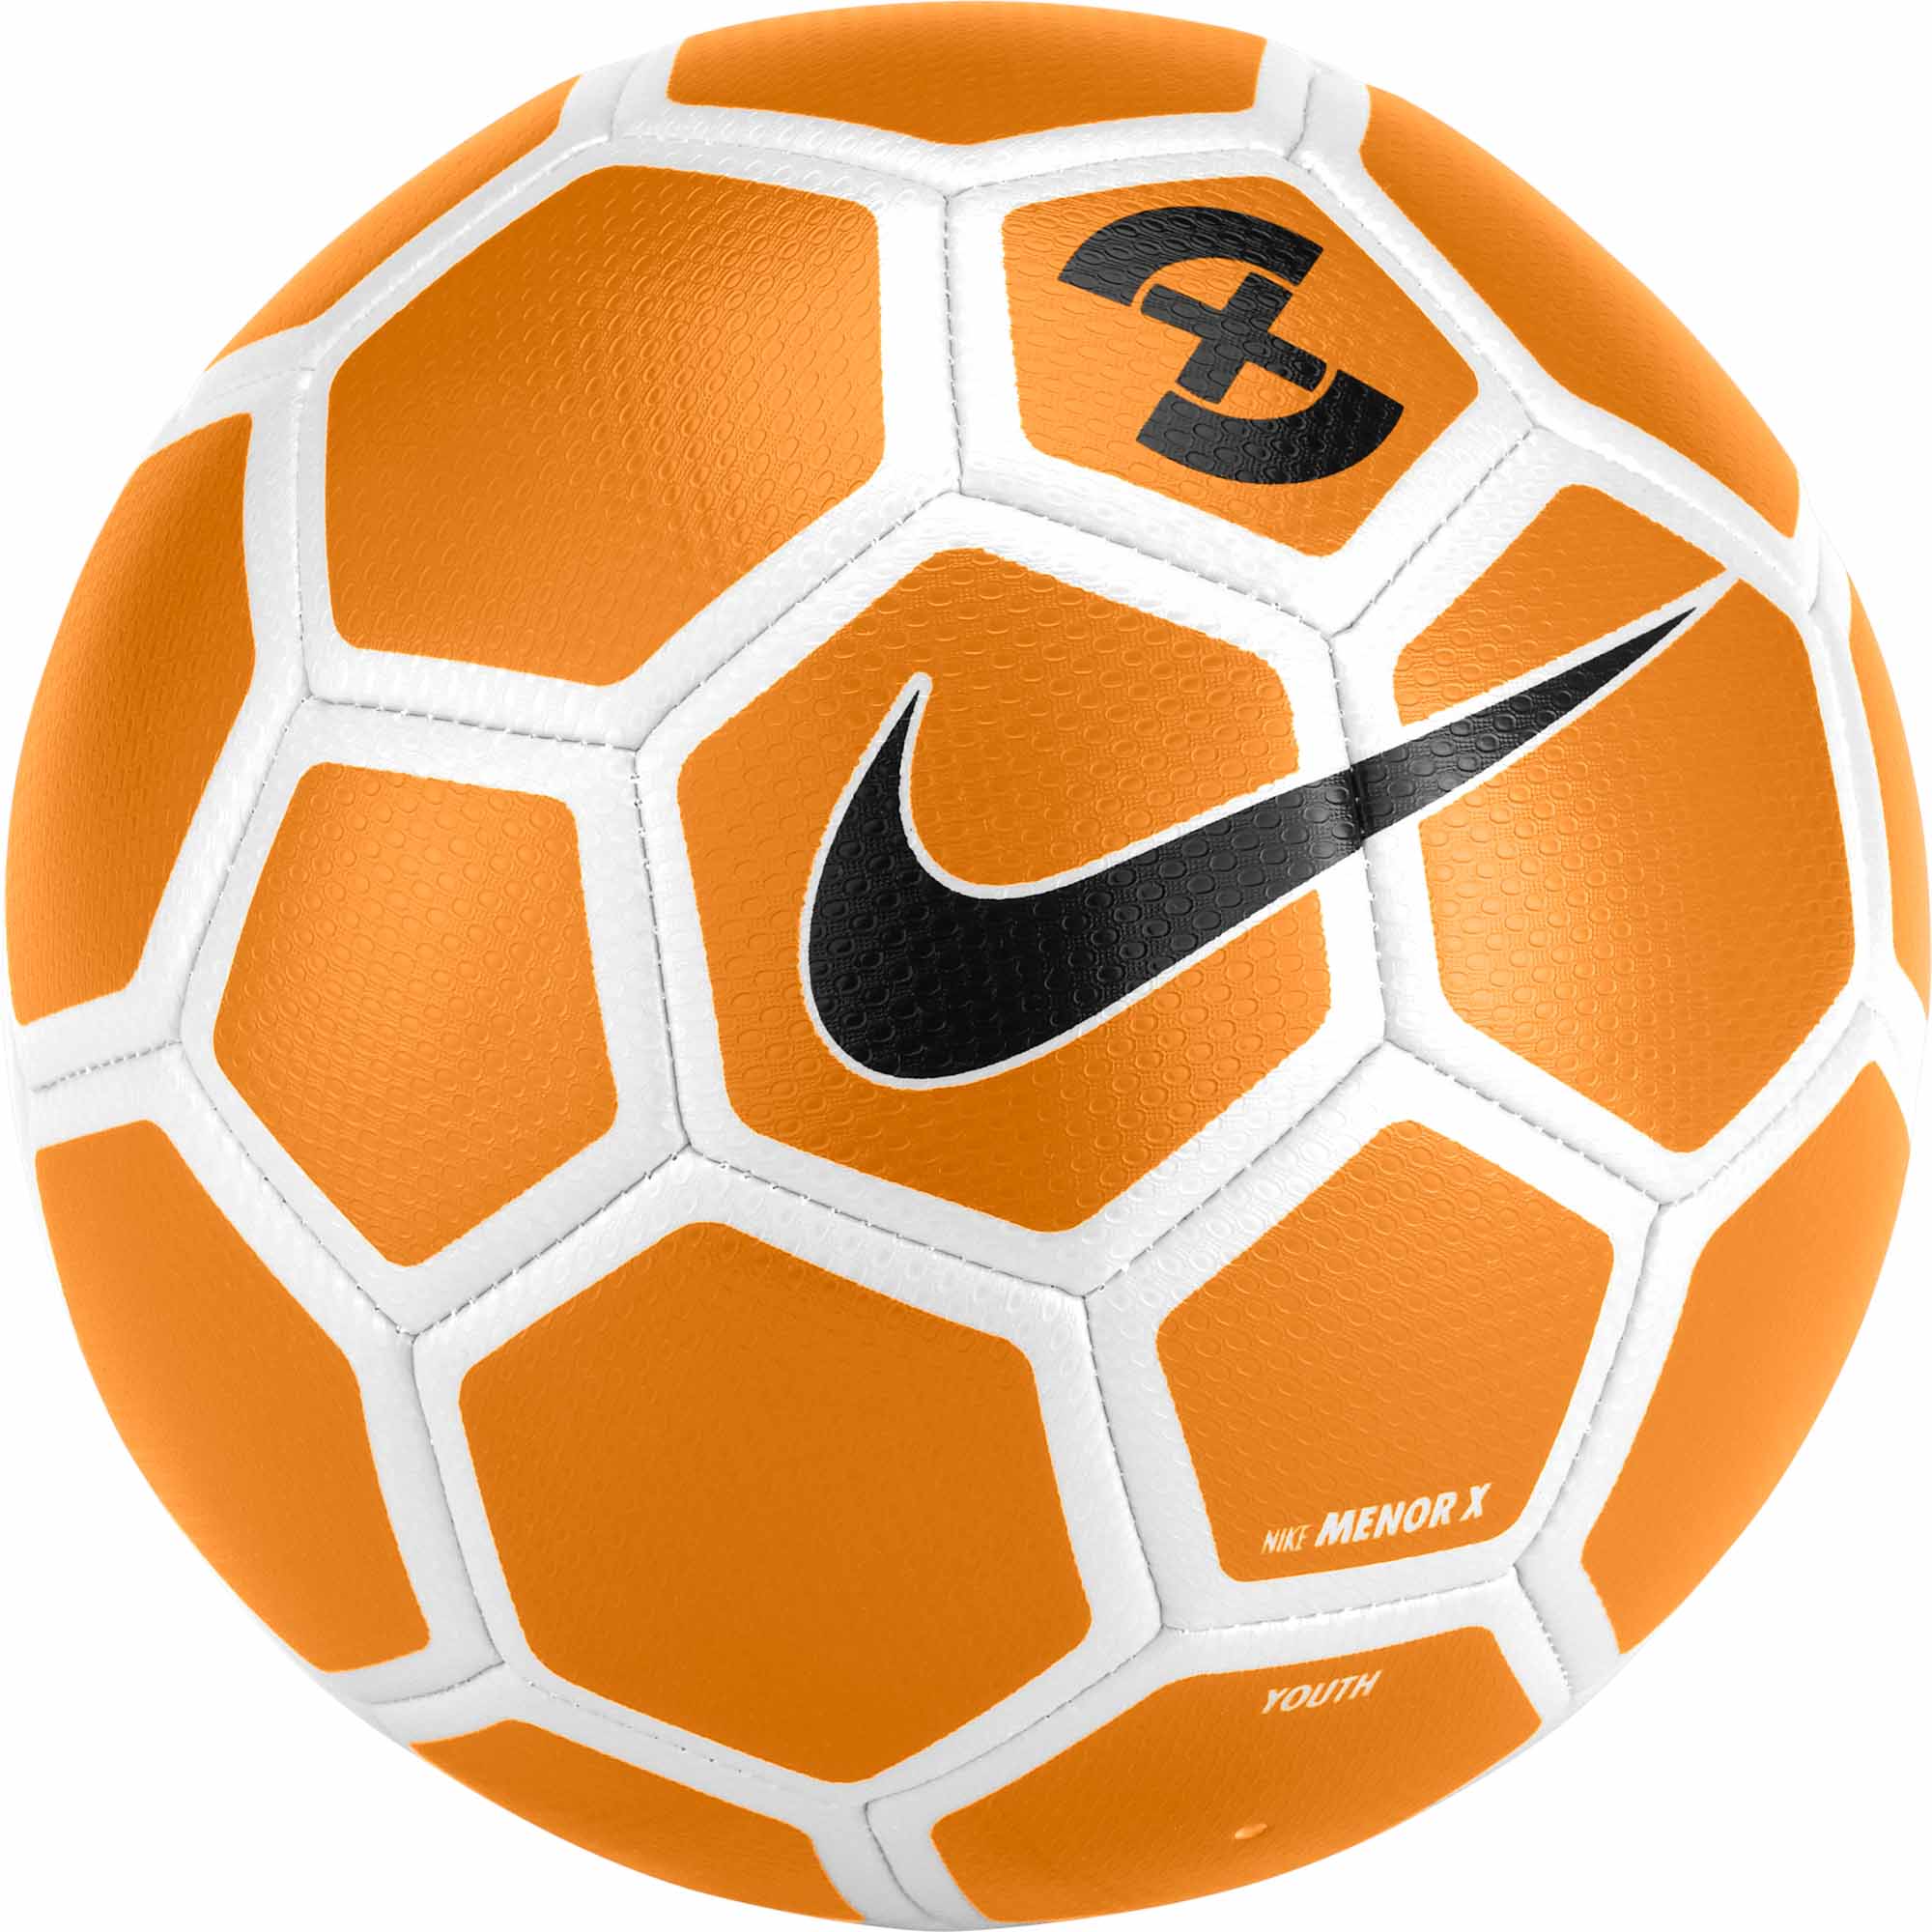 Nike Menor X Futsal Ball - Orange Nike Soccer Balls